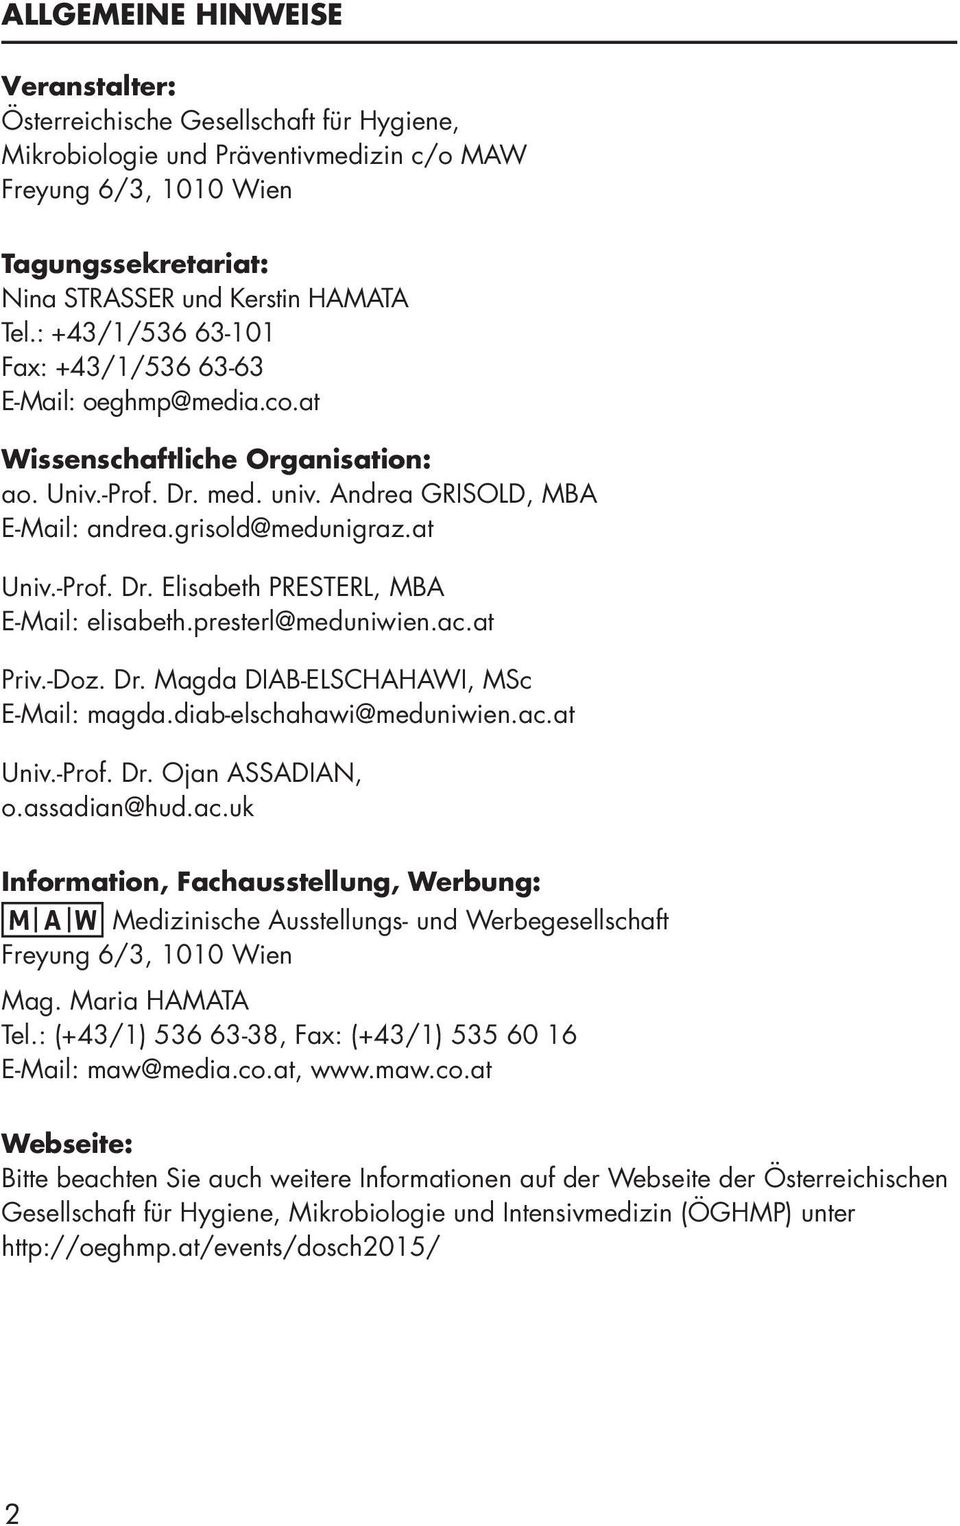 presterl@meduniwien.ac.at Priv.-Doz. Dr. Magda DIAB-ELSCHAHAWI, MSc E-Mail: magda.diab-elschahawi@meduniwien.ac.at Univ.-Prof. Dr. Ojan ASSADIAN, o.assadian@hud.ac.uk Information, Fachausstellung, Werbung: Medizinische Ausstellungs- und Werbegesellschaft Freyung 6/3, 1010 Wien Mag.